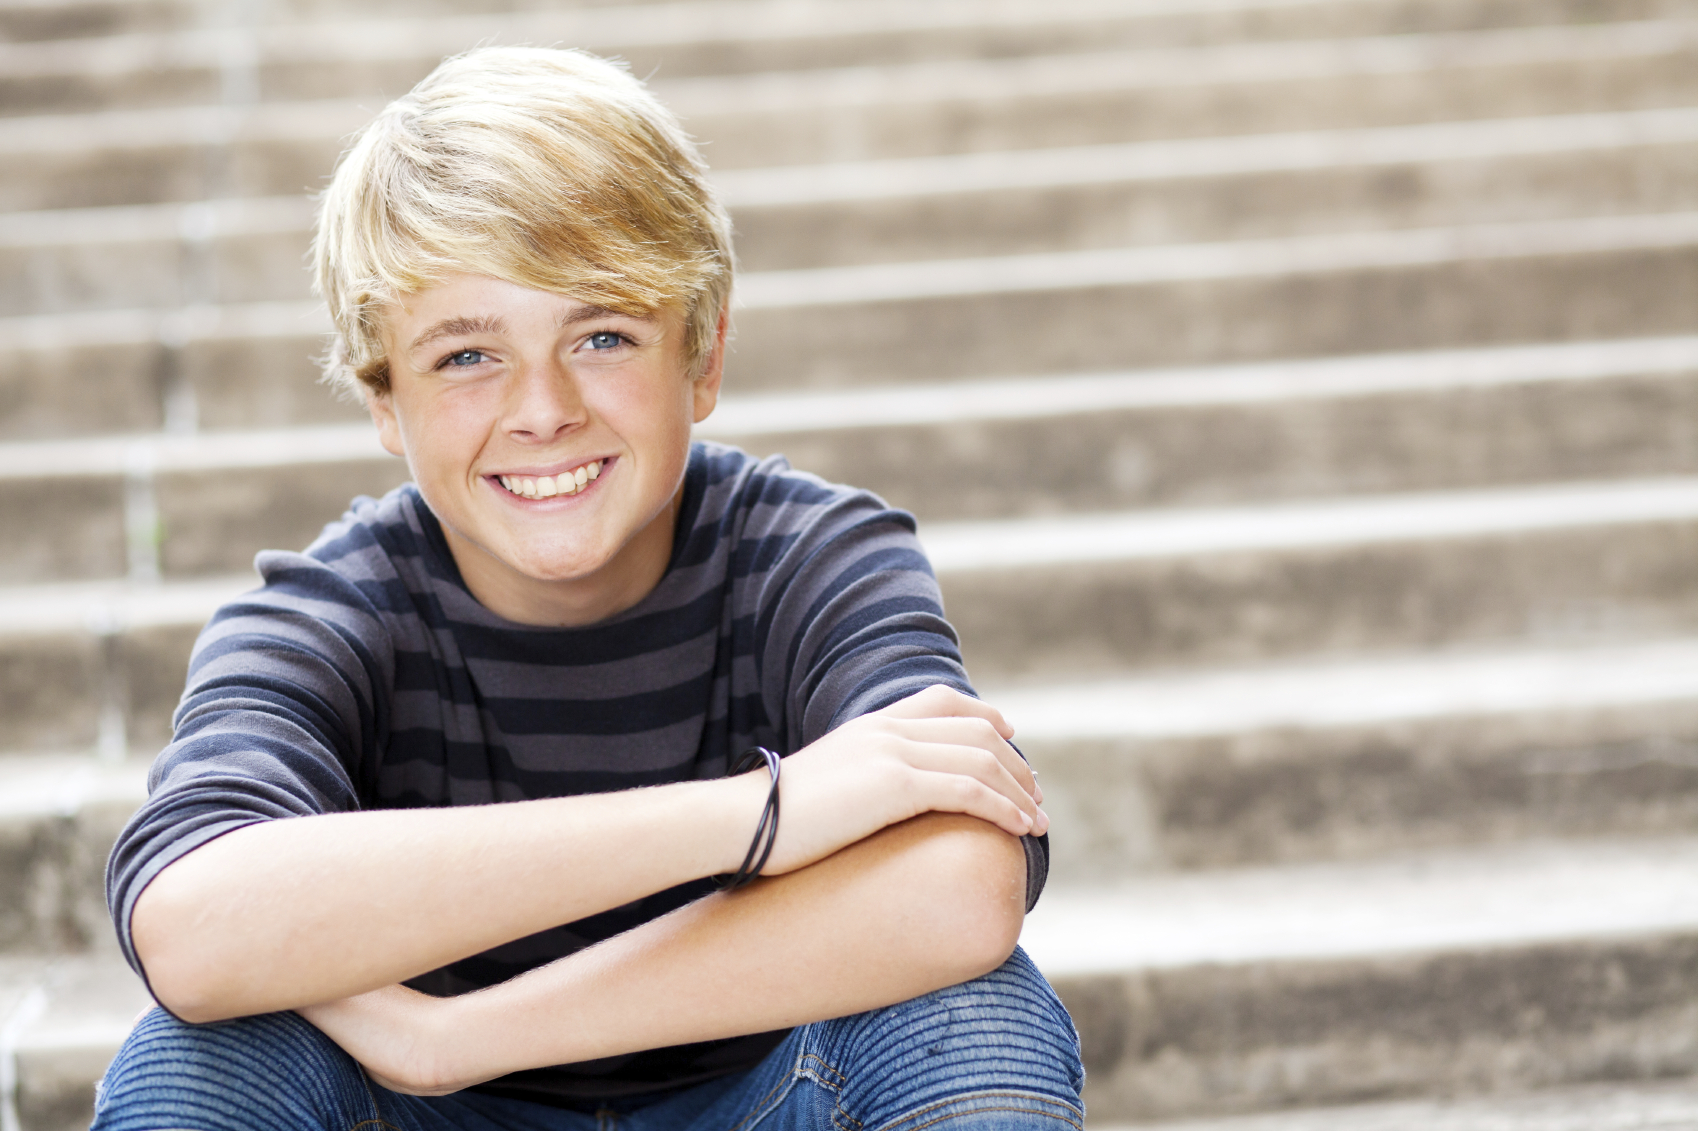 smiling teen boy